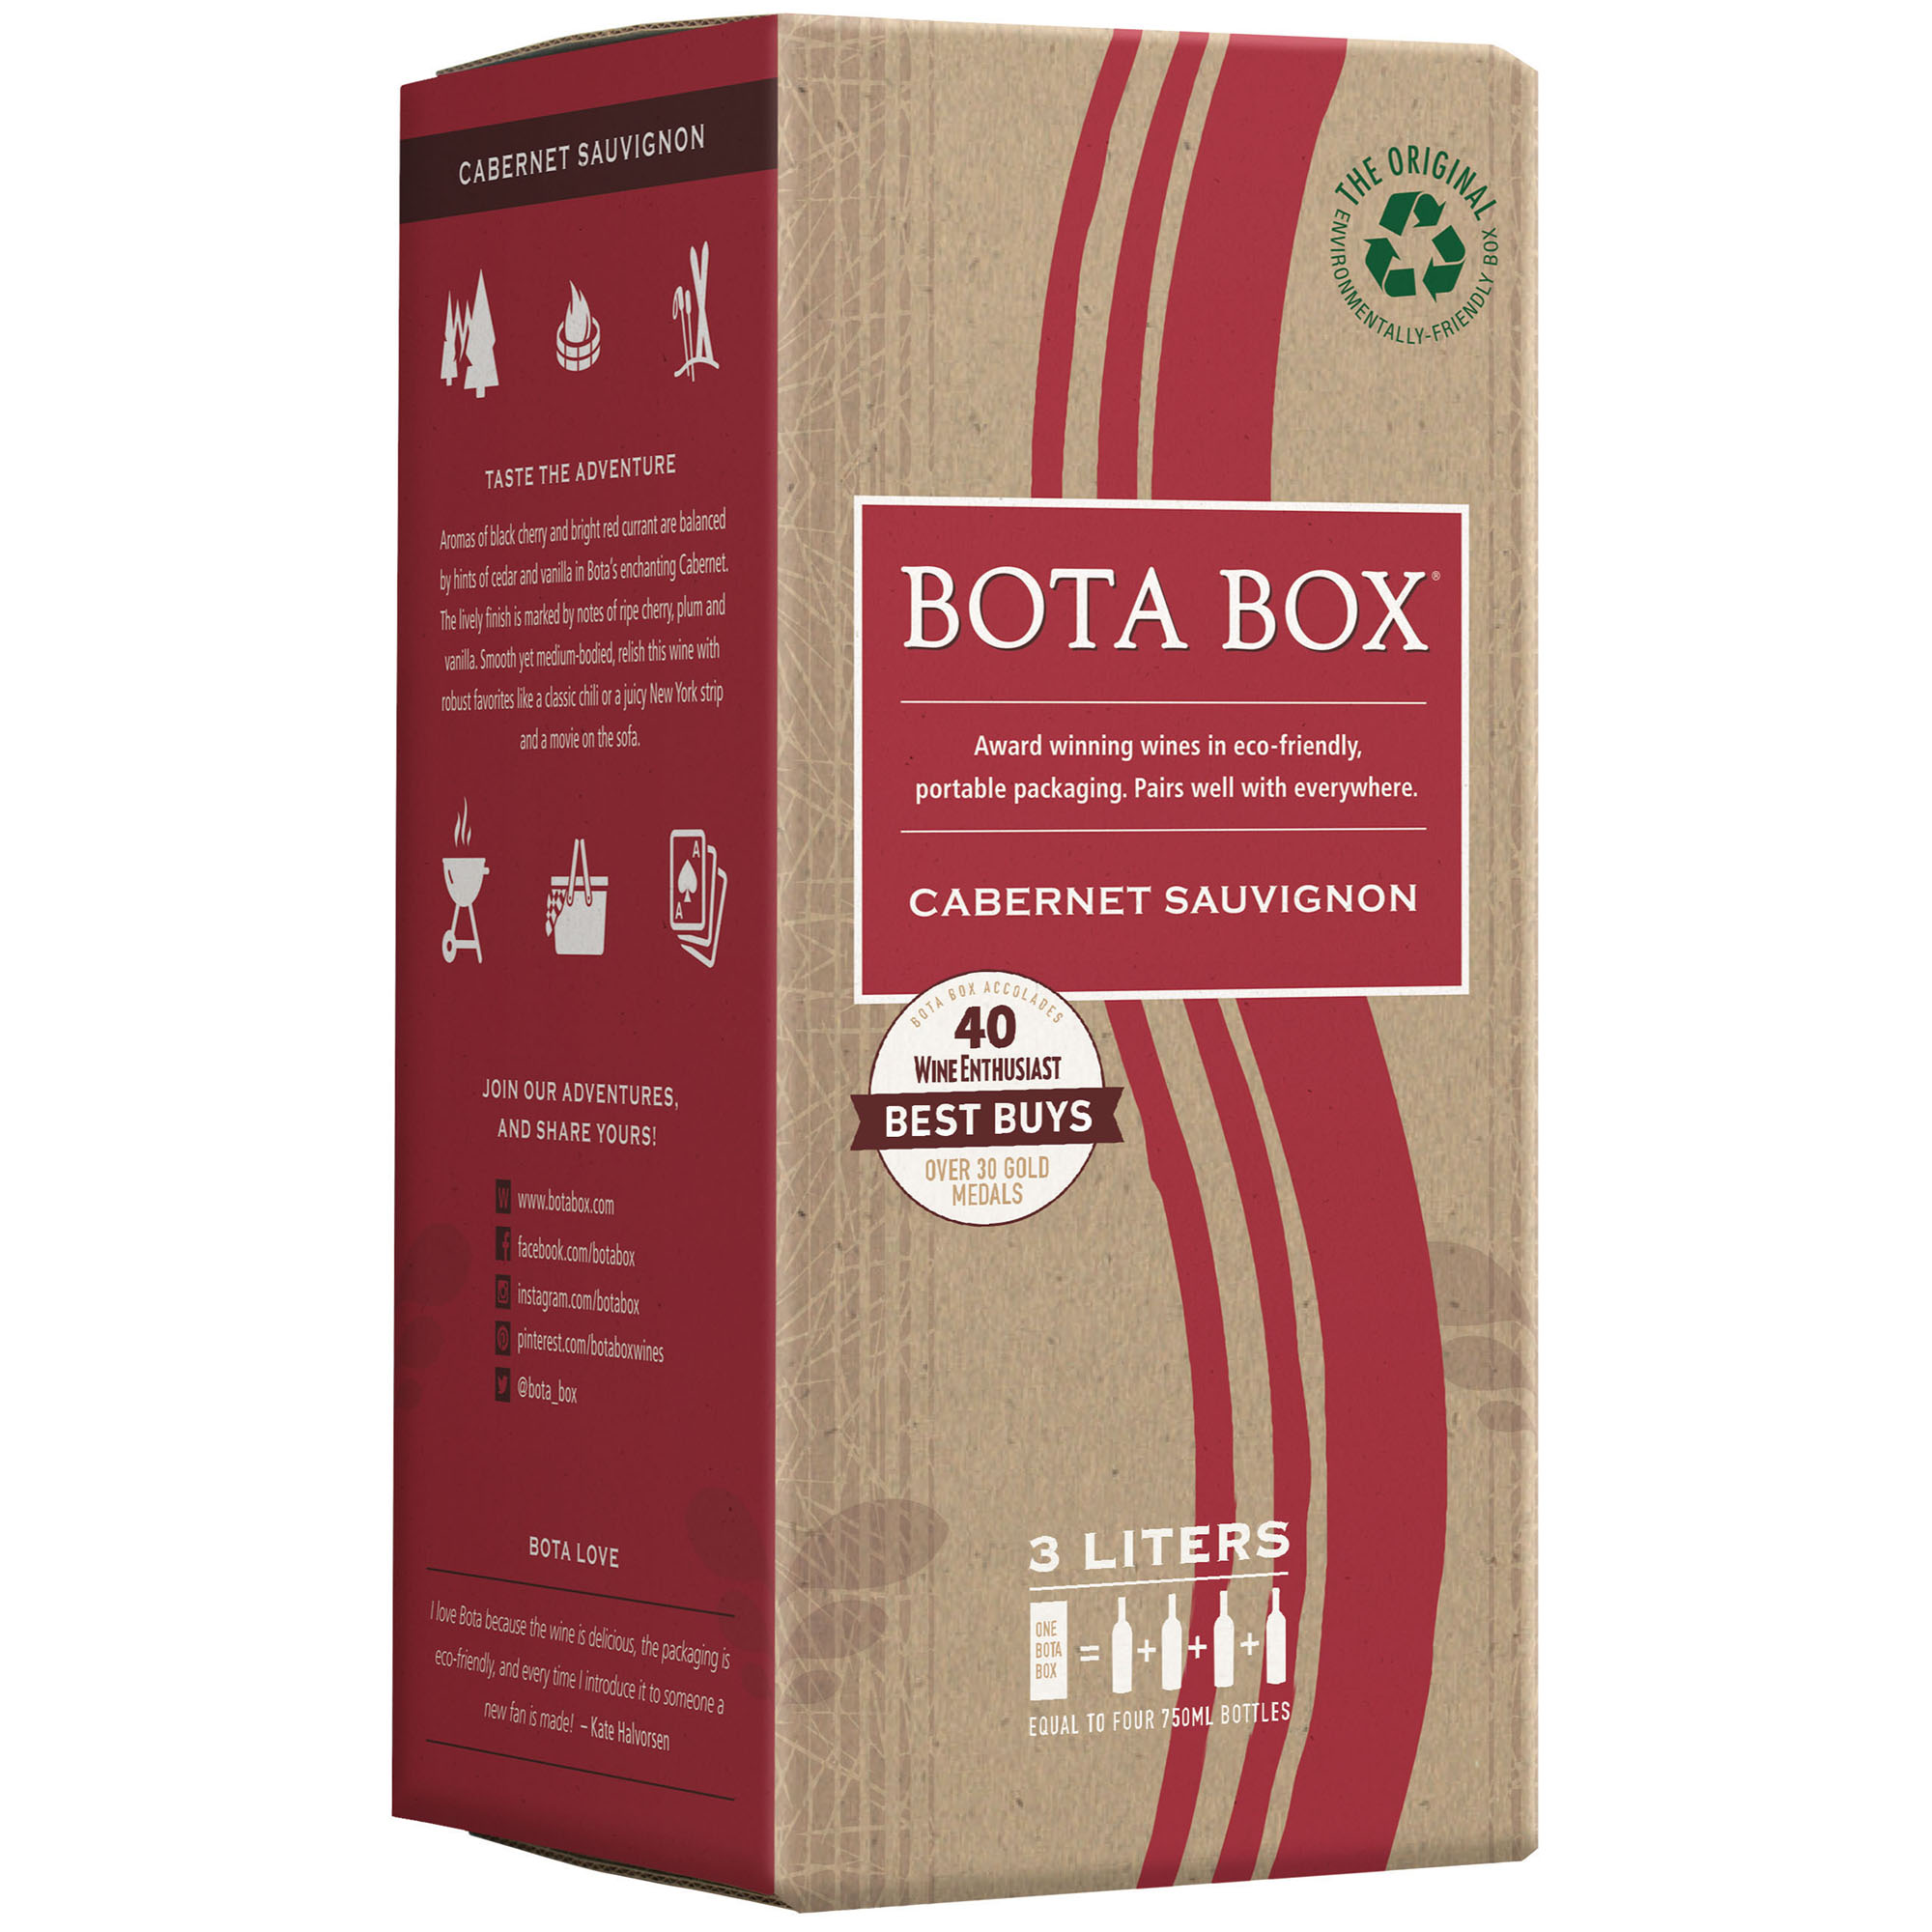 images/wine/Red Wine/Bota Box Cabernet Sauvignon.jpg